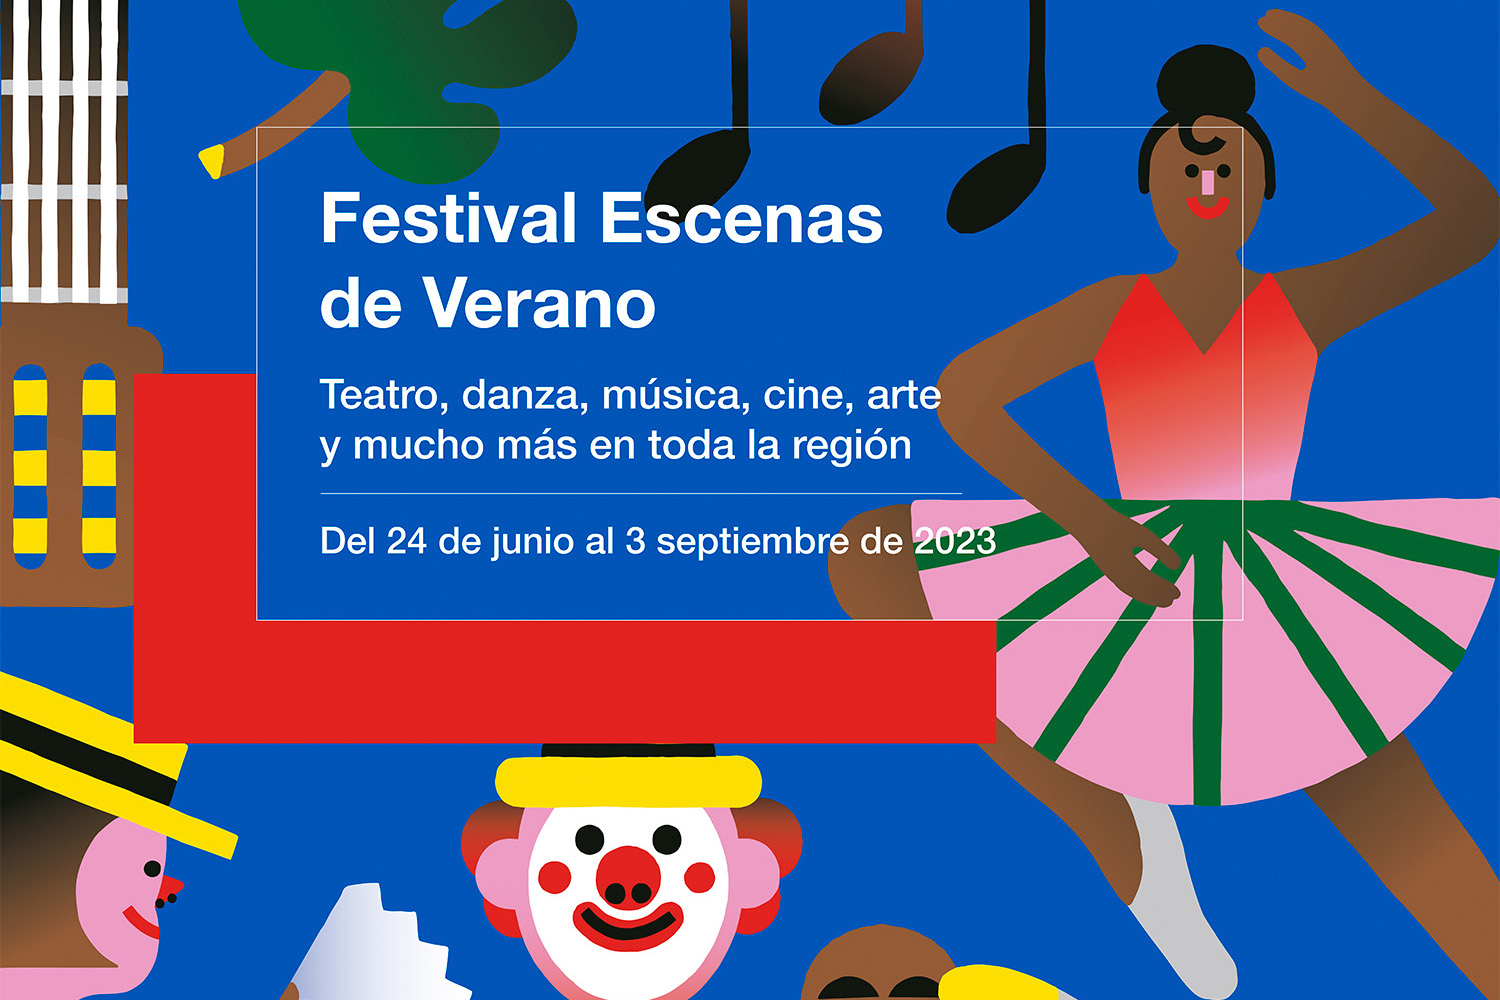 4th edition of the Escenas de Verano Festival